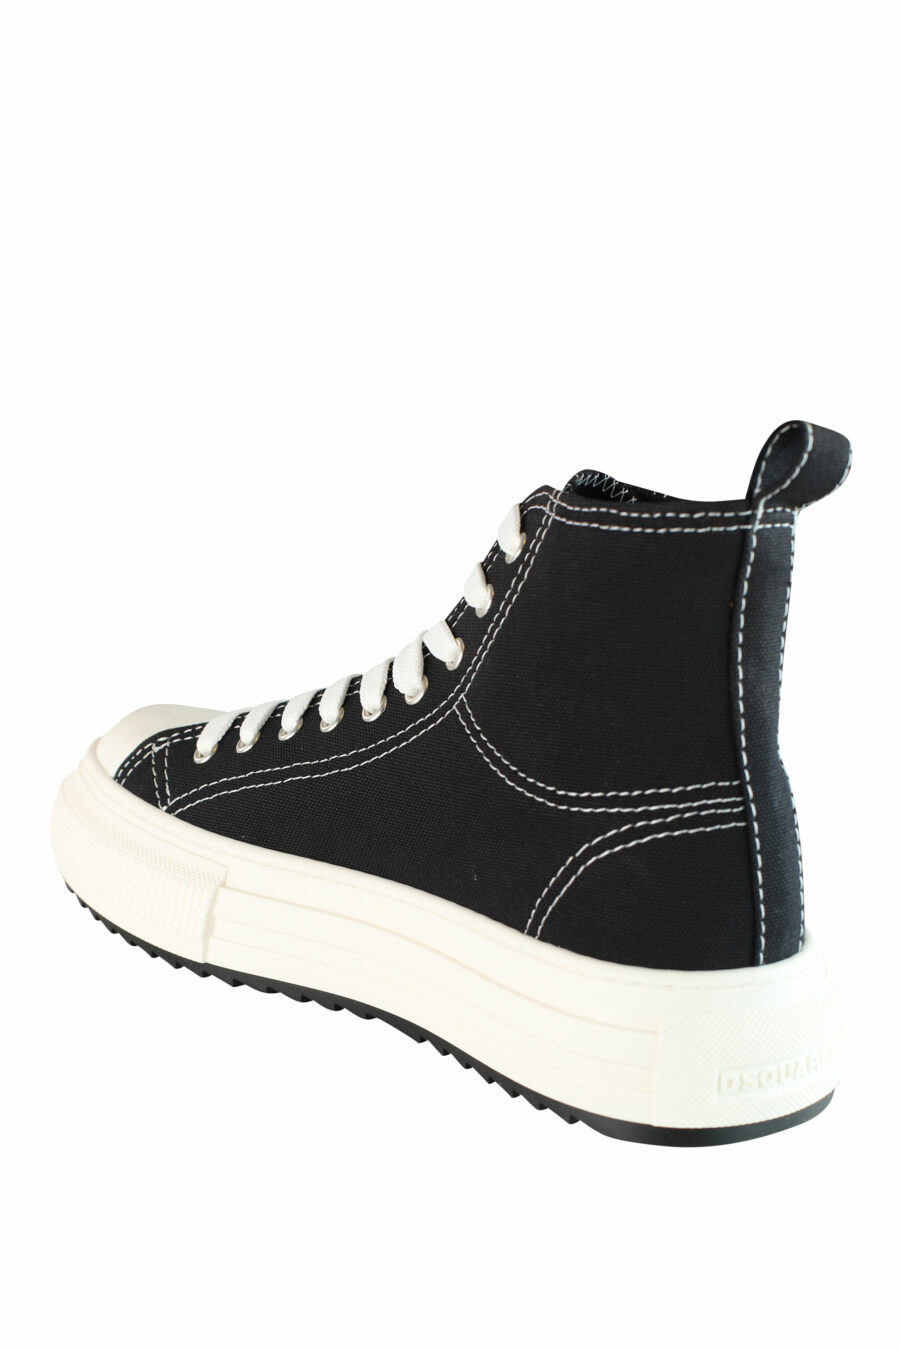 Sapatilhas pretas estilo bota com plataforma e mini logótipo - IMG 1423